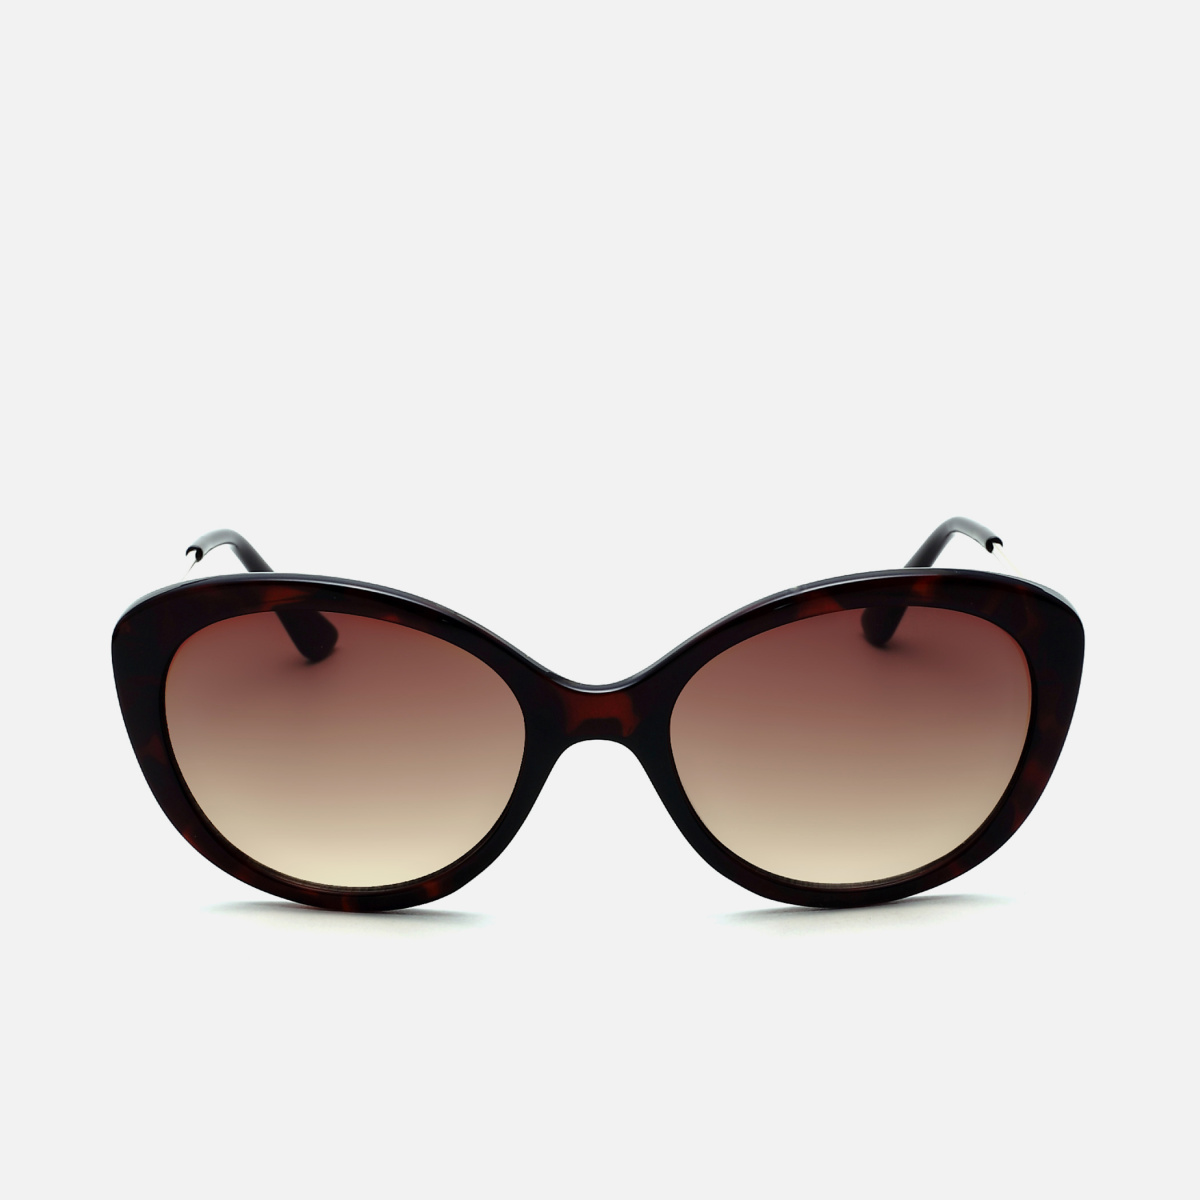 BEBE Women UV-Protected Cateye Sunglasses- BEBE3046C1S